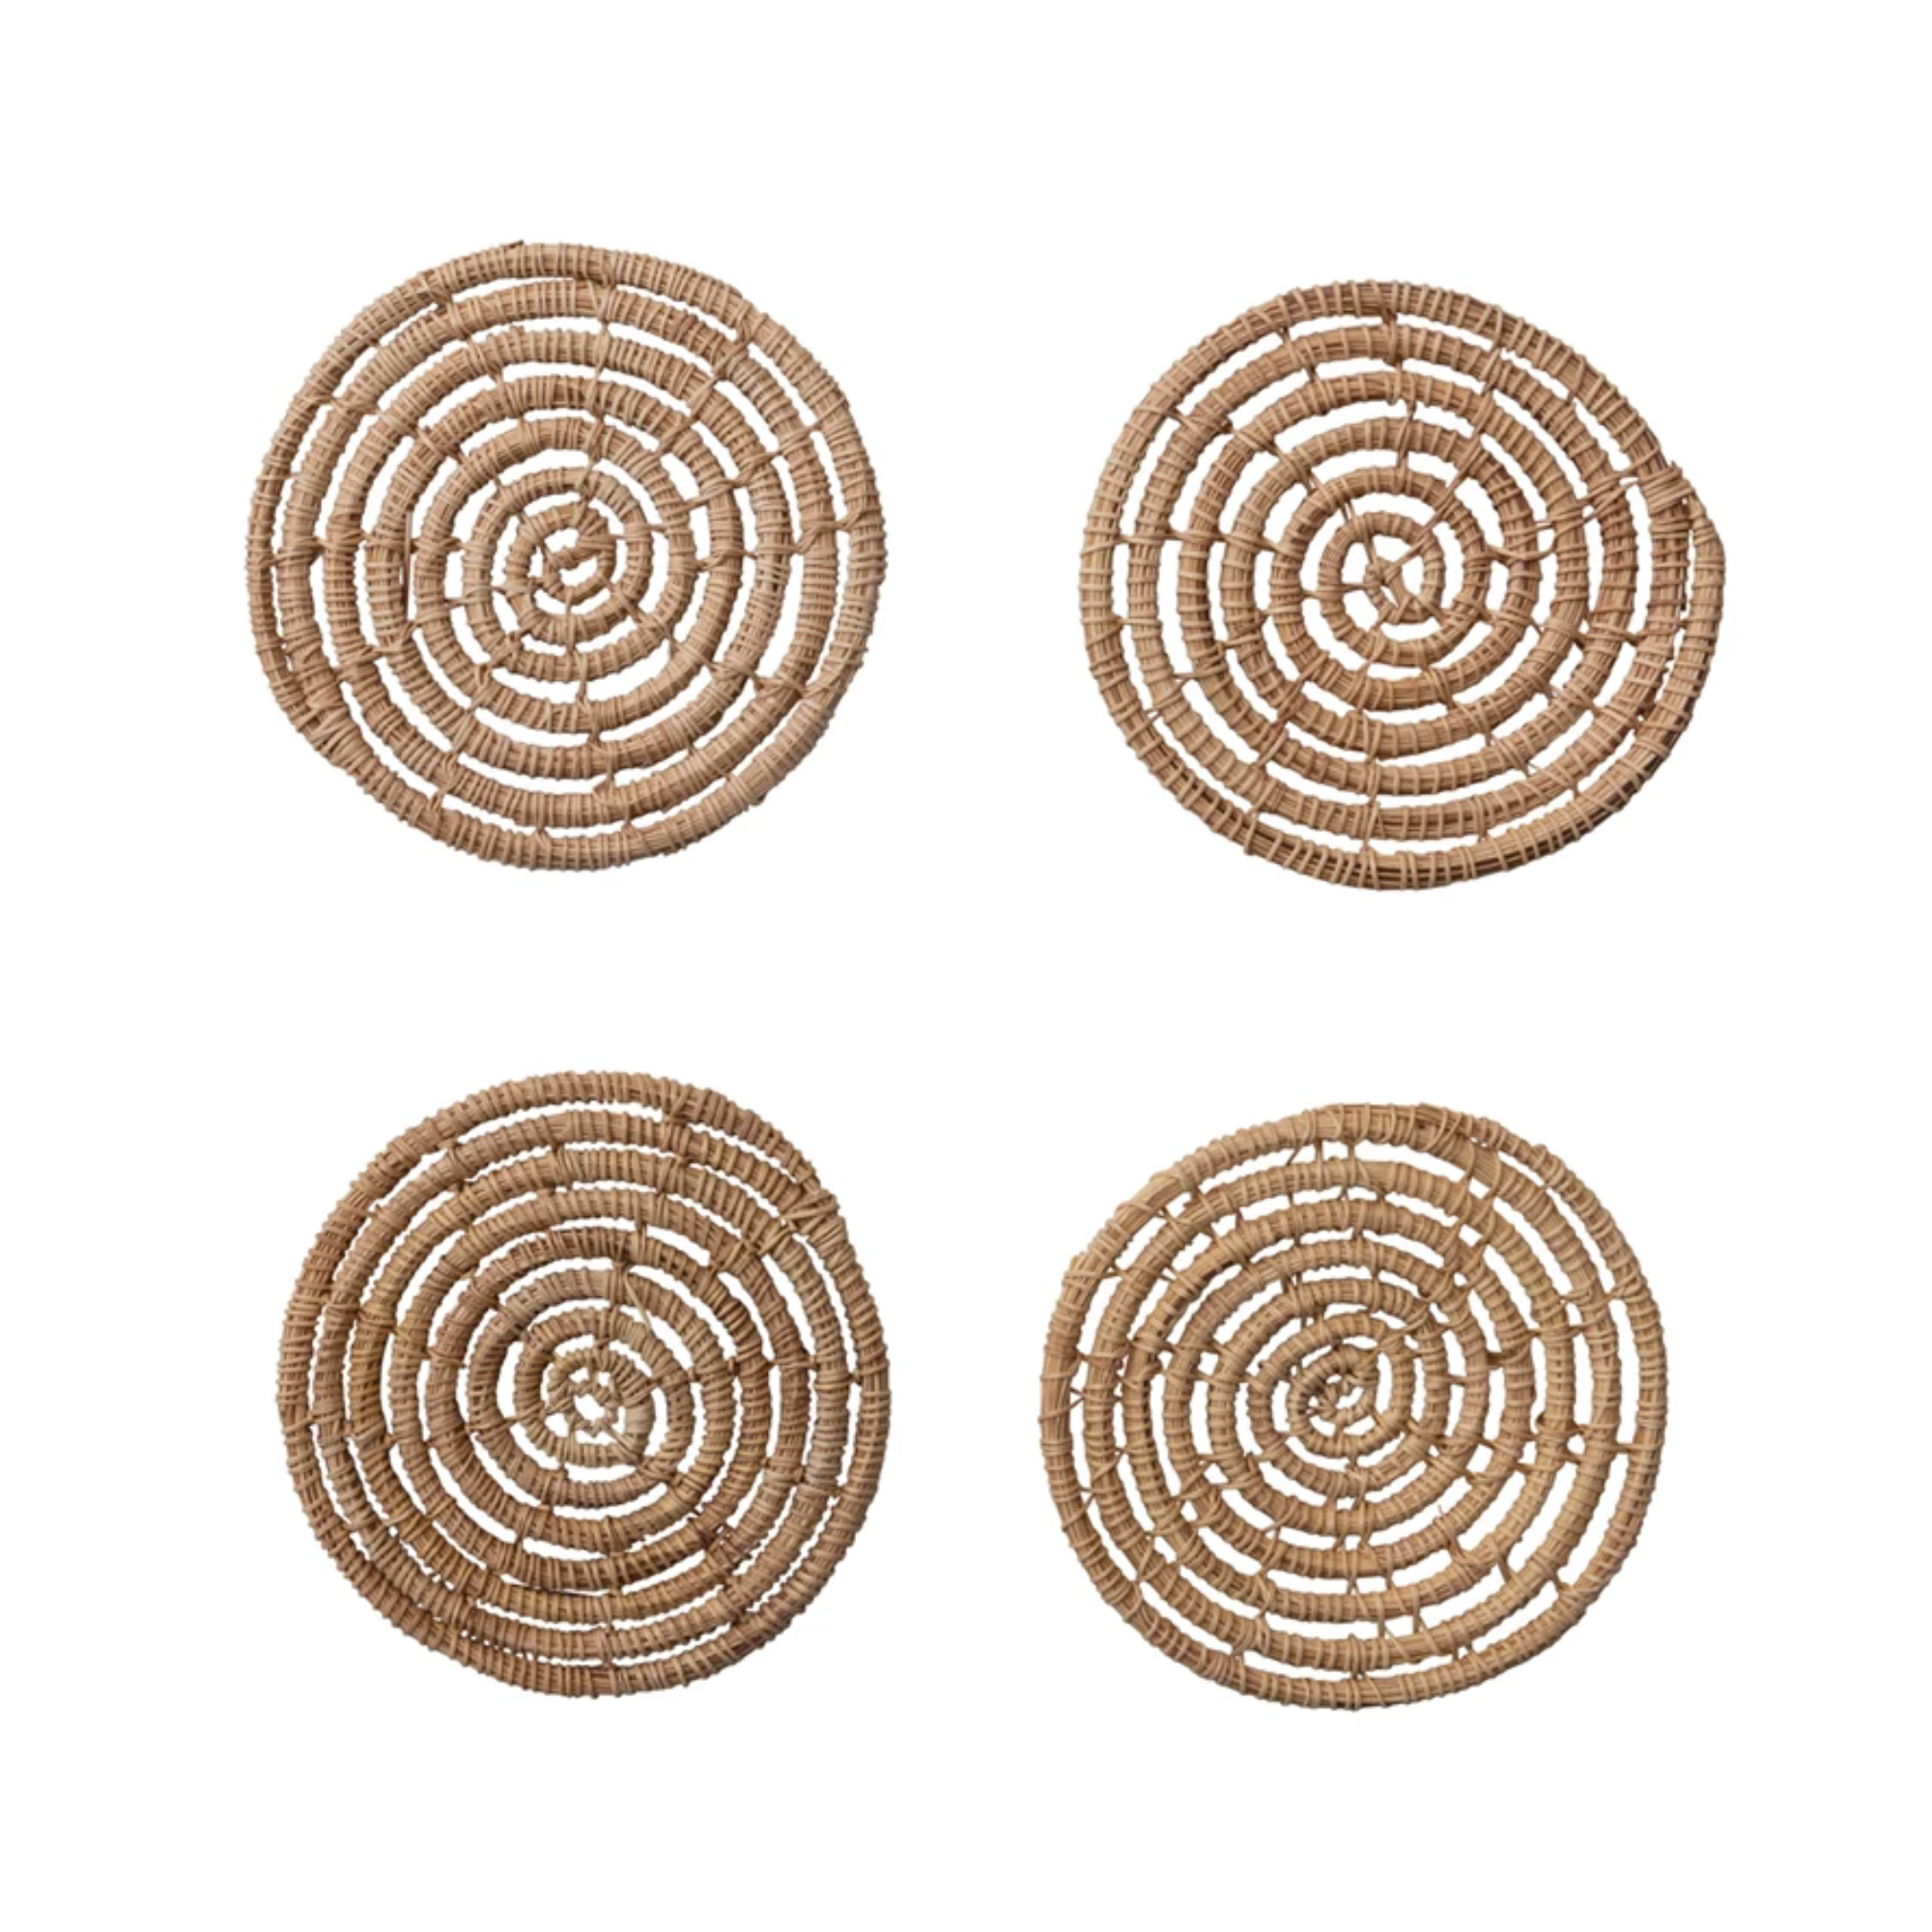 Woven Palm Coasters - Set of 4